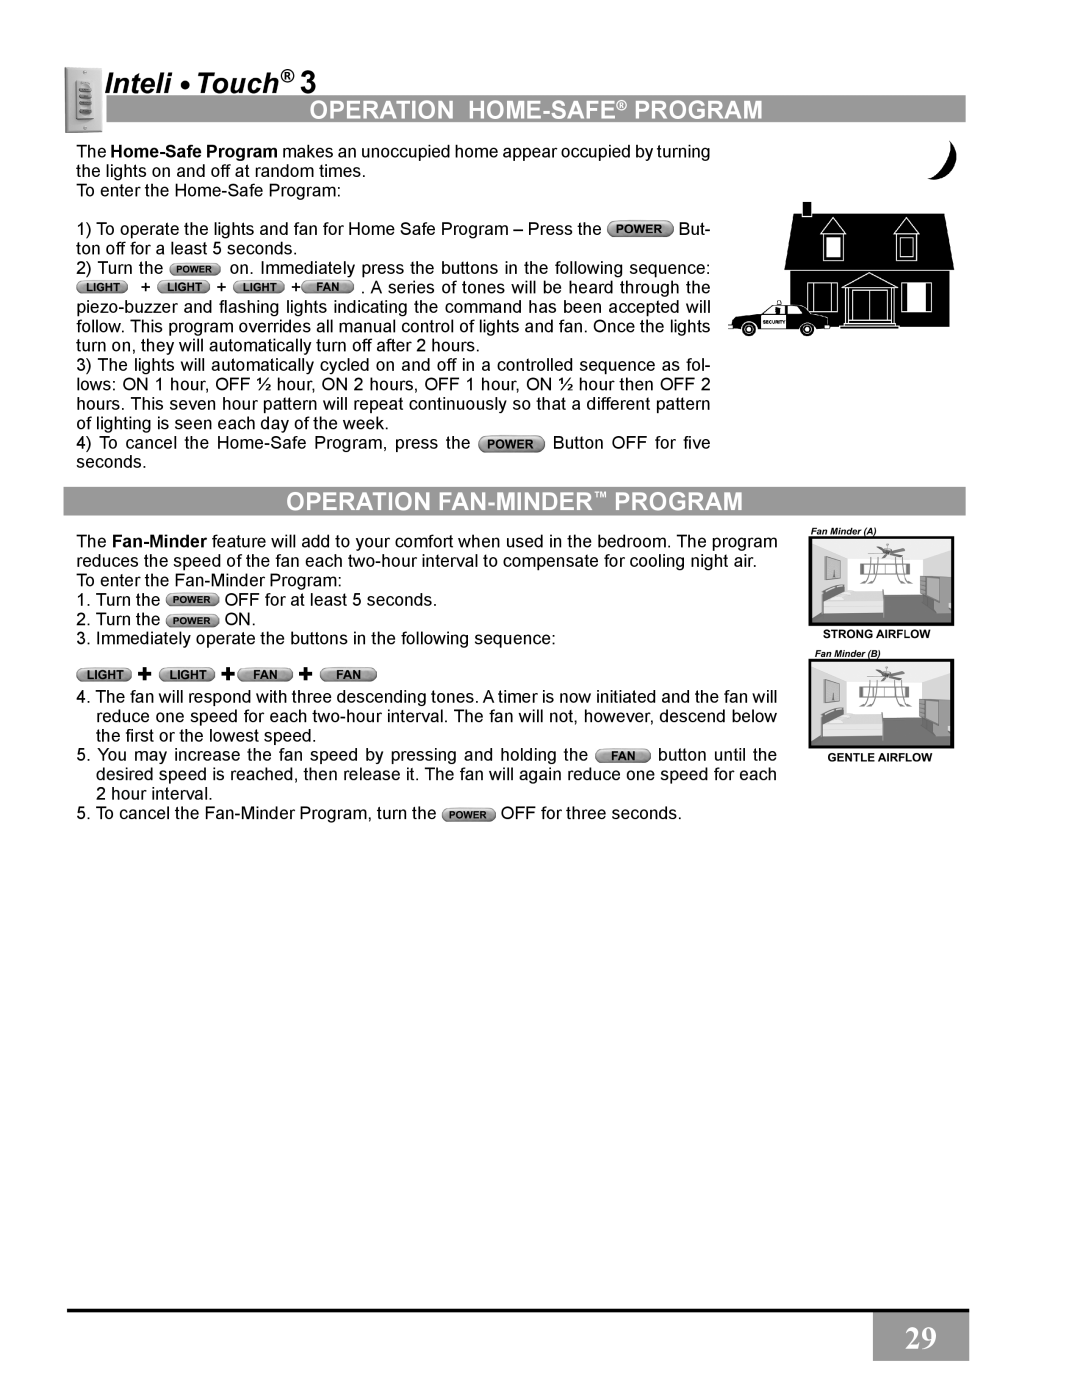 Casablanca Fan Company C31UxxZ owner manual Operation Home-Safe Program, Operation Fan-Minder Program, + + + 